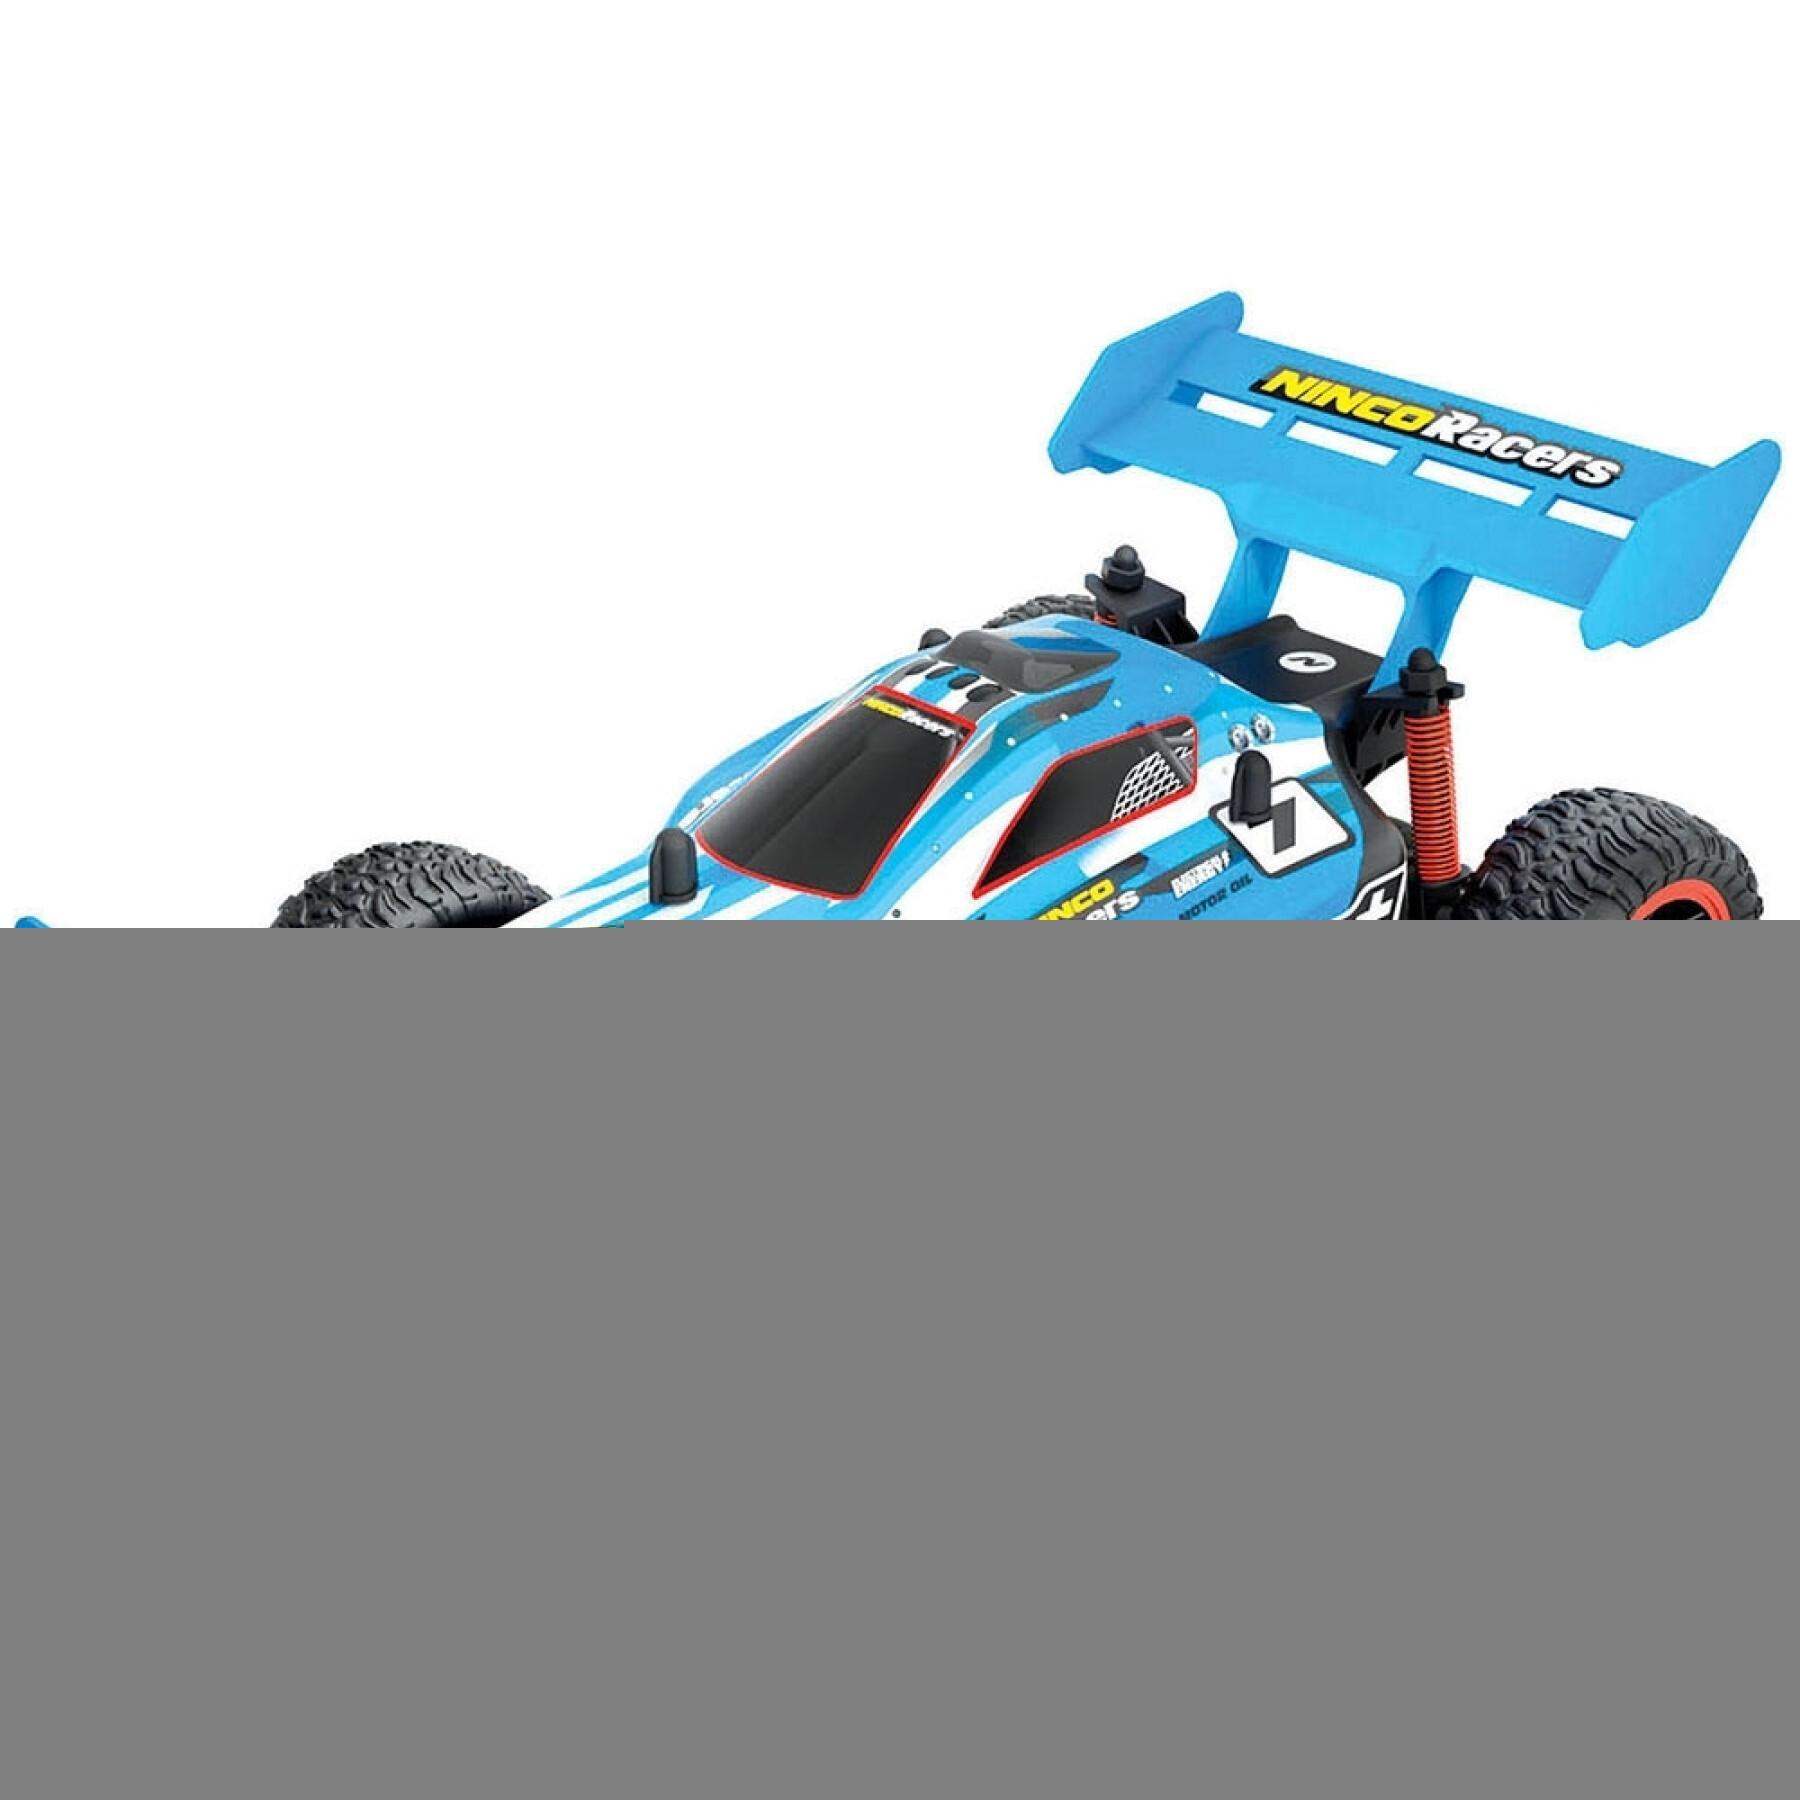 Auto telecomandata Ninco Racers Stream 26 cm